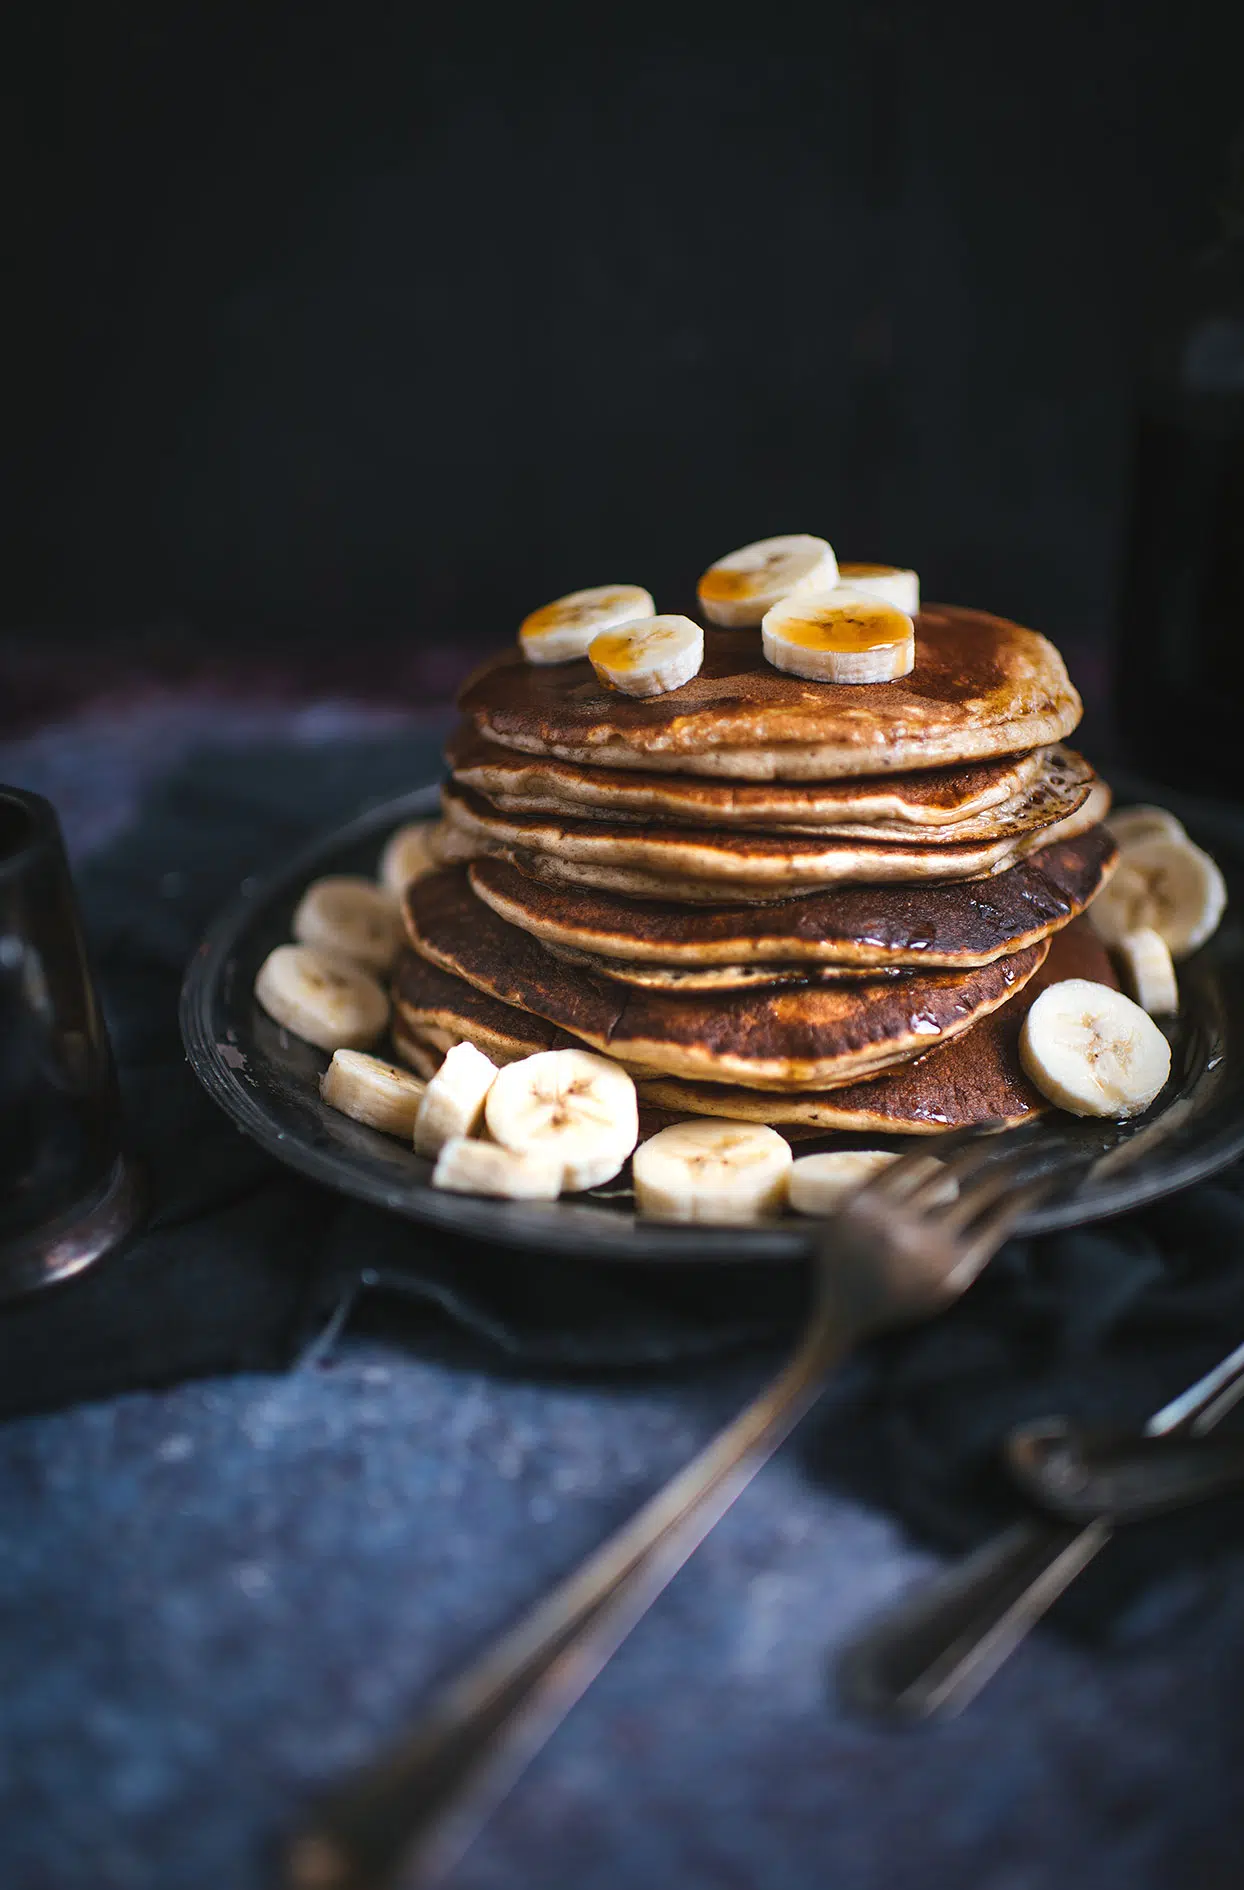 Pancakes aux bananes